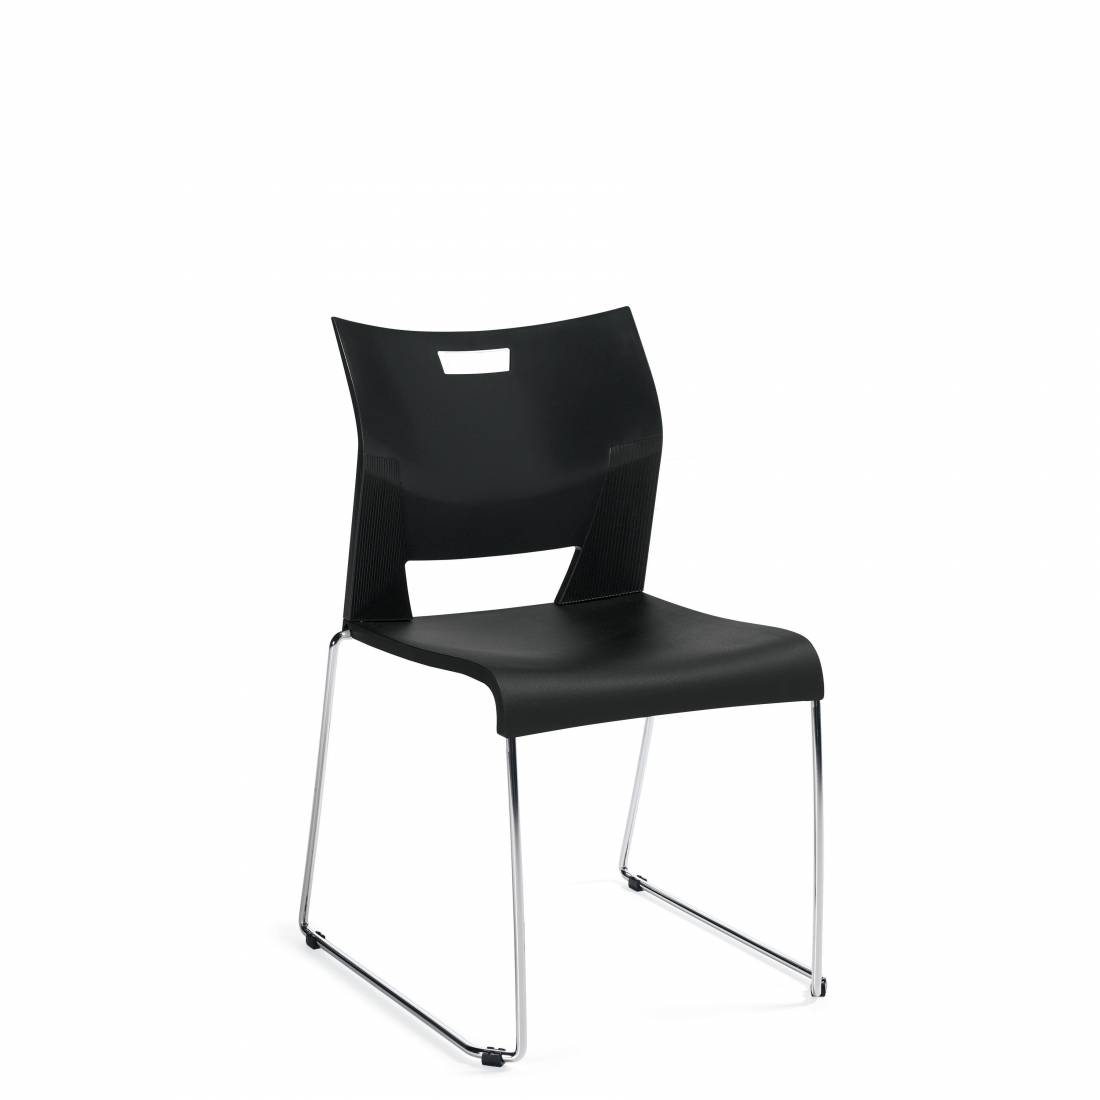 Armless Chair, Polypropylene Seat & Back